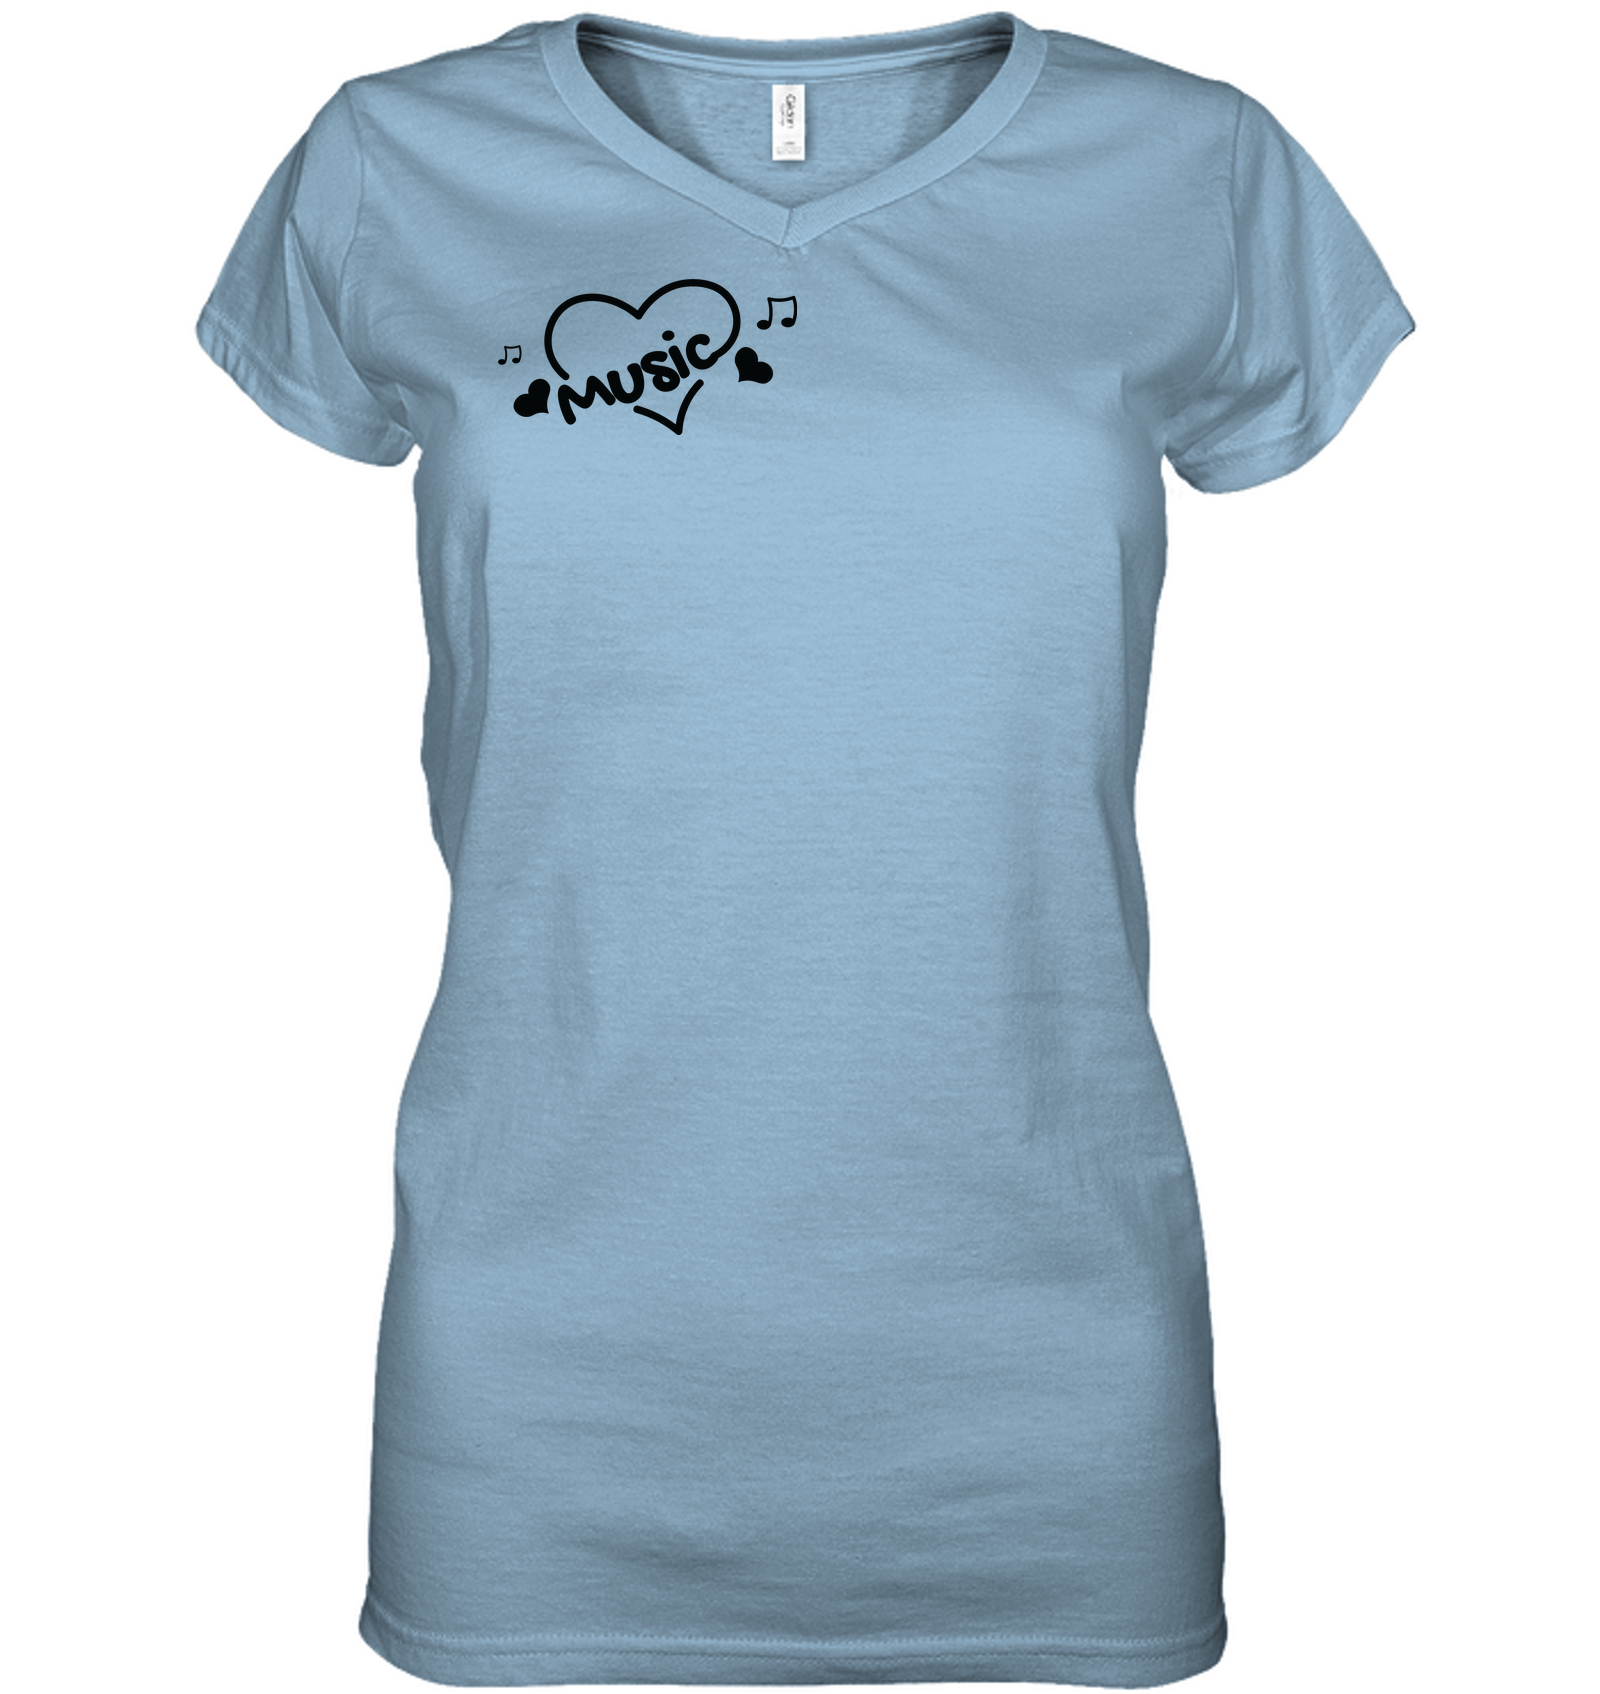 Music Hearts and Notes (Pocket Size) - Hanes Women's Nano-T® V-Neck T-Shirt